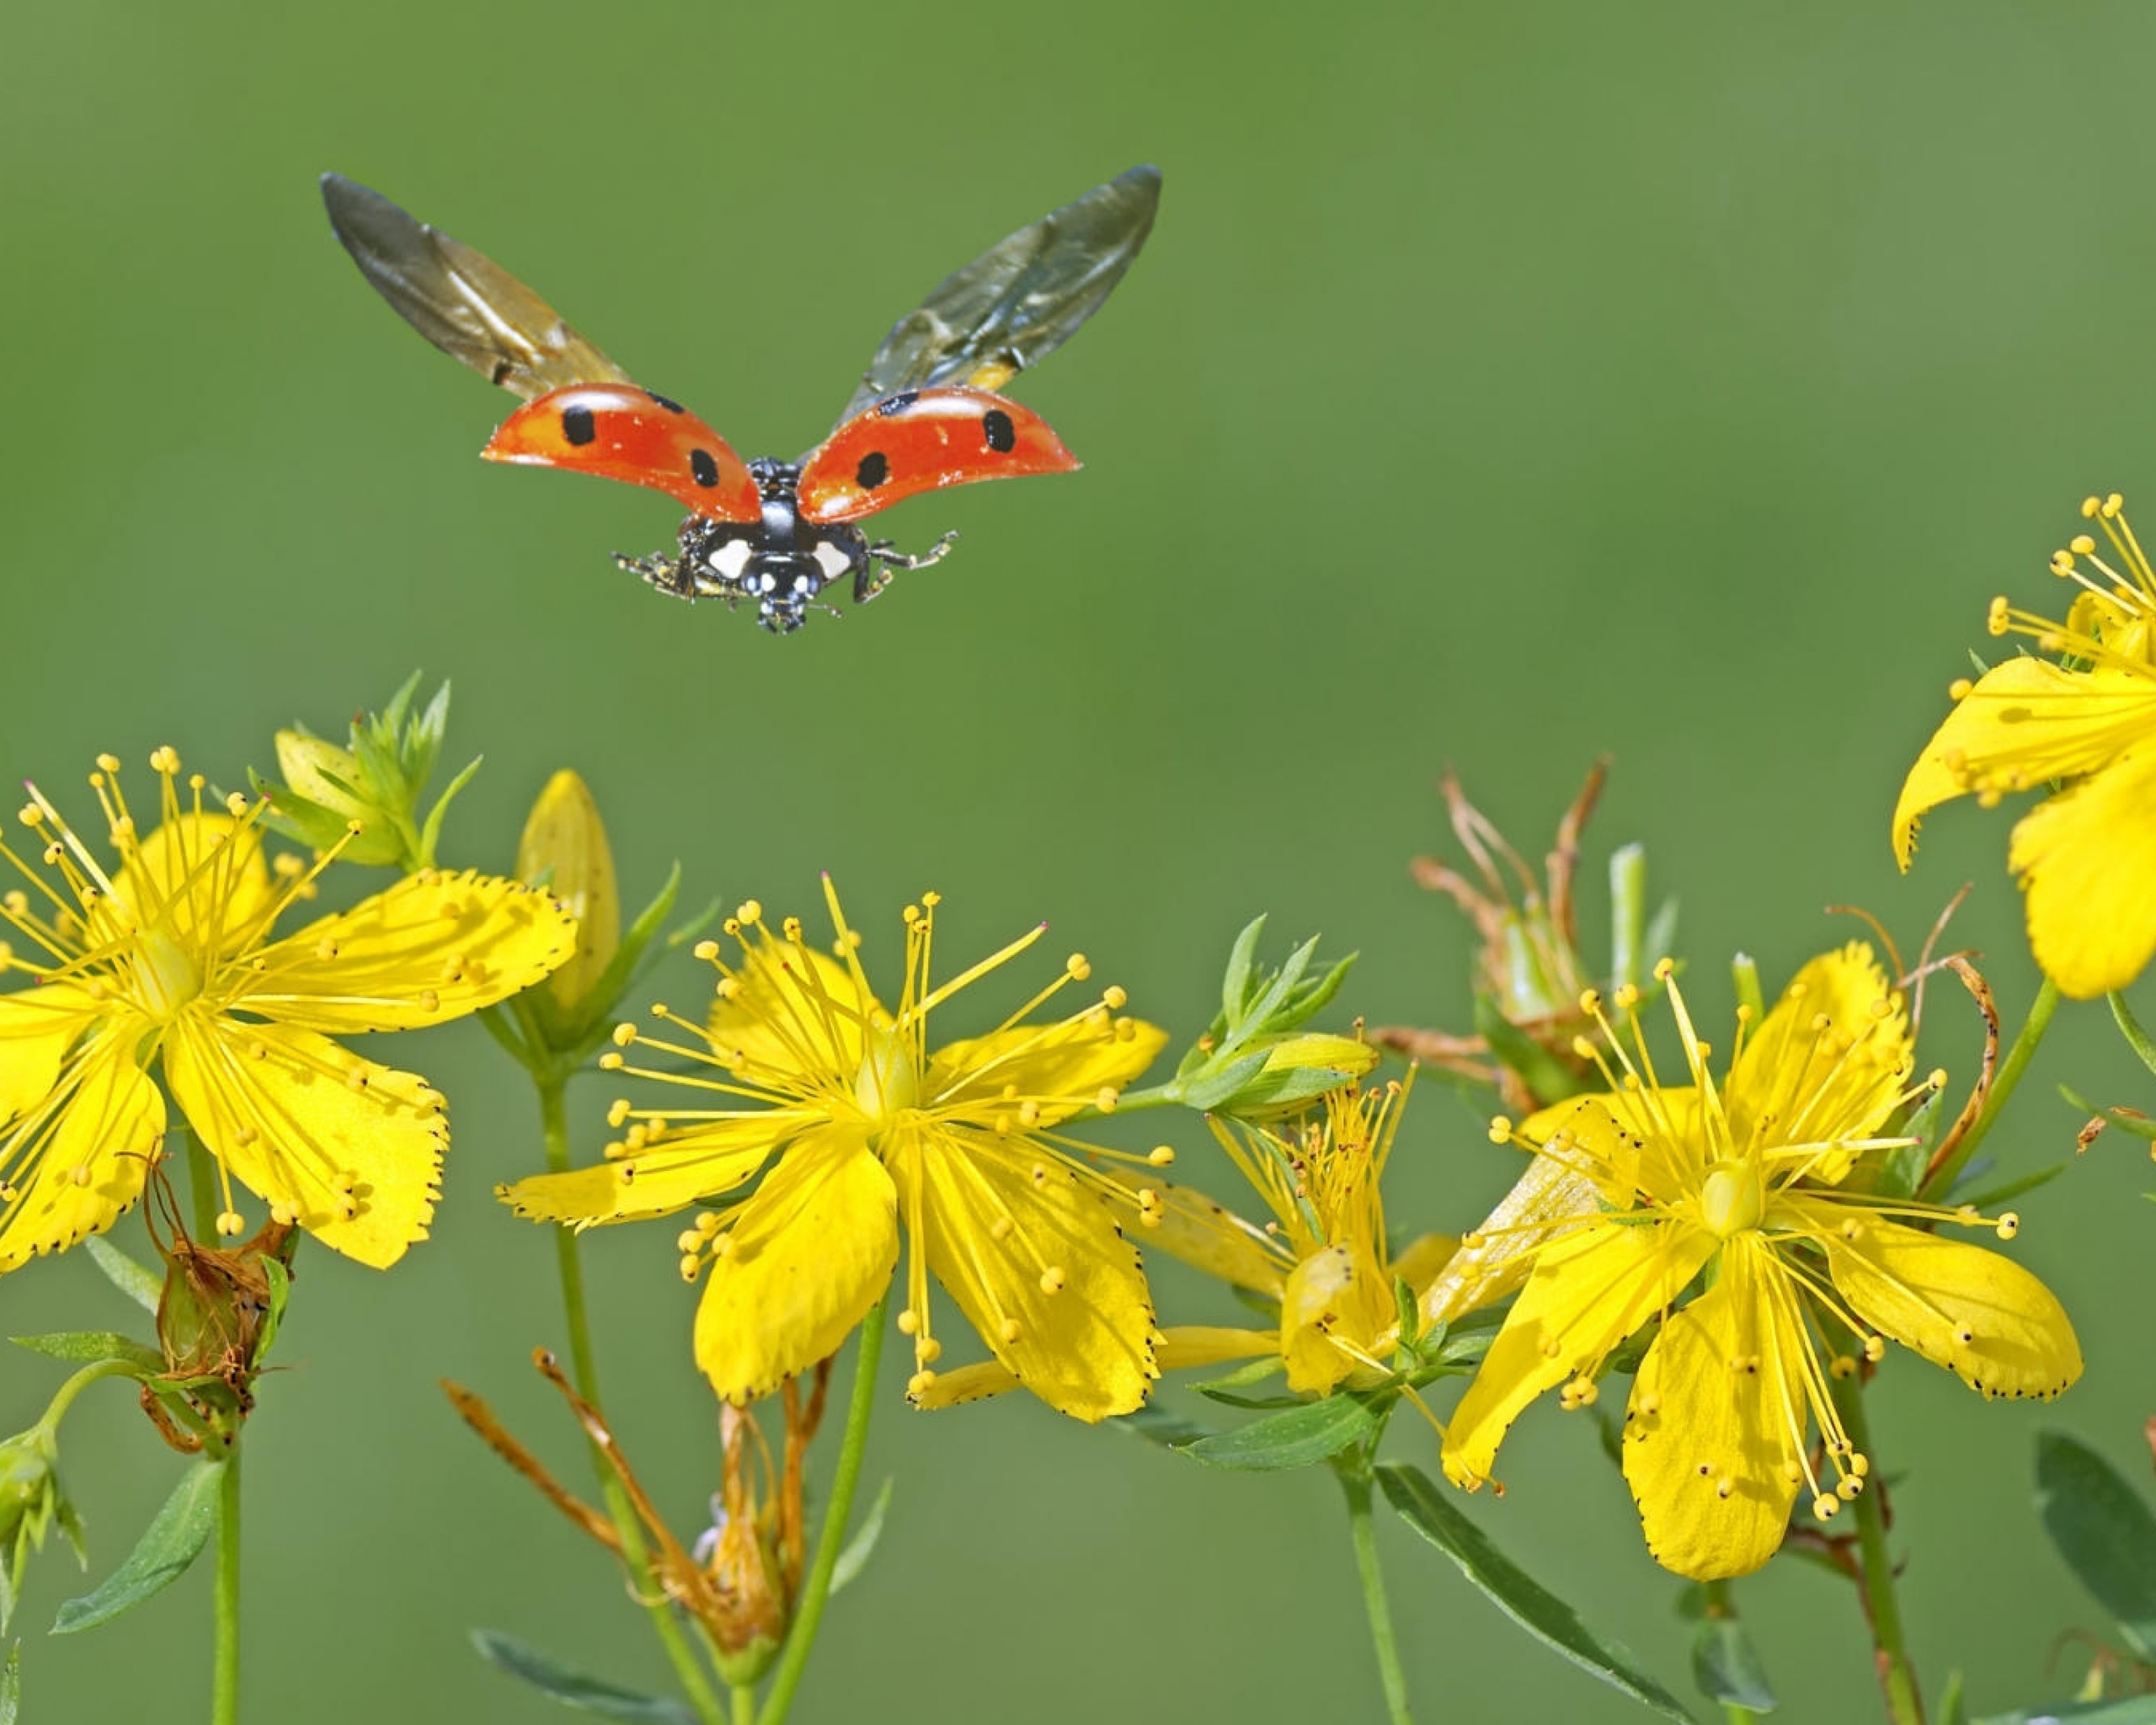 Image: Ladybug, wings, flight, St. John's wort, yellow flowers